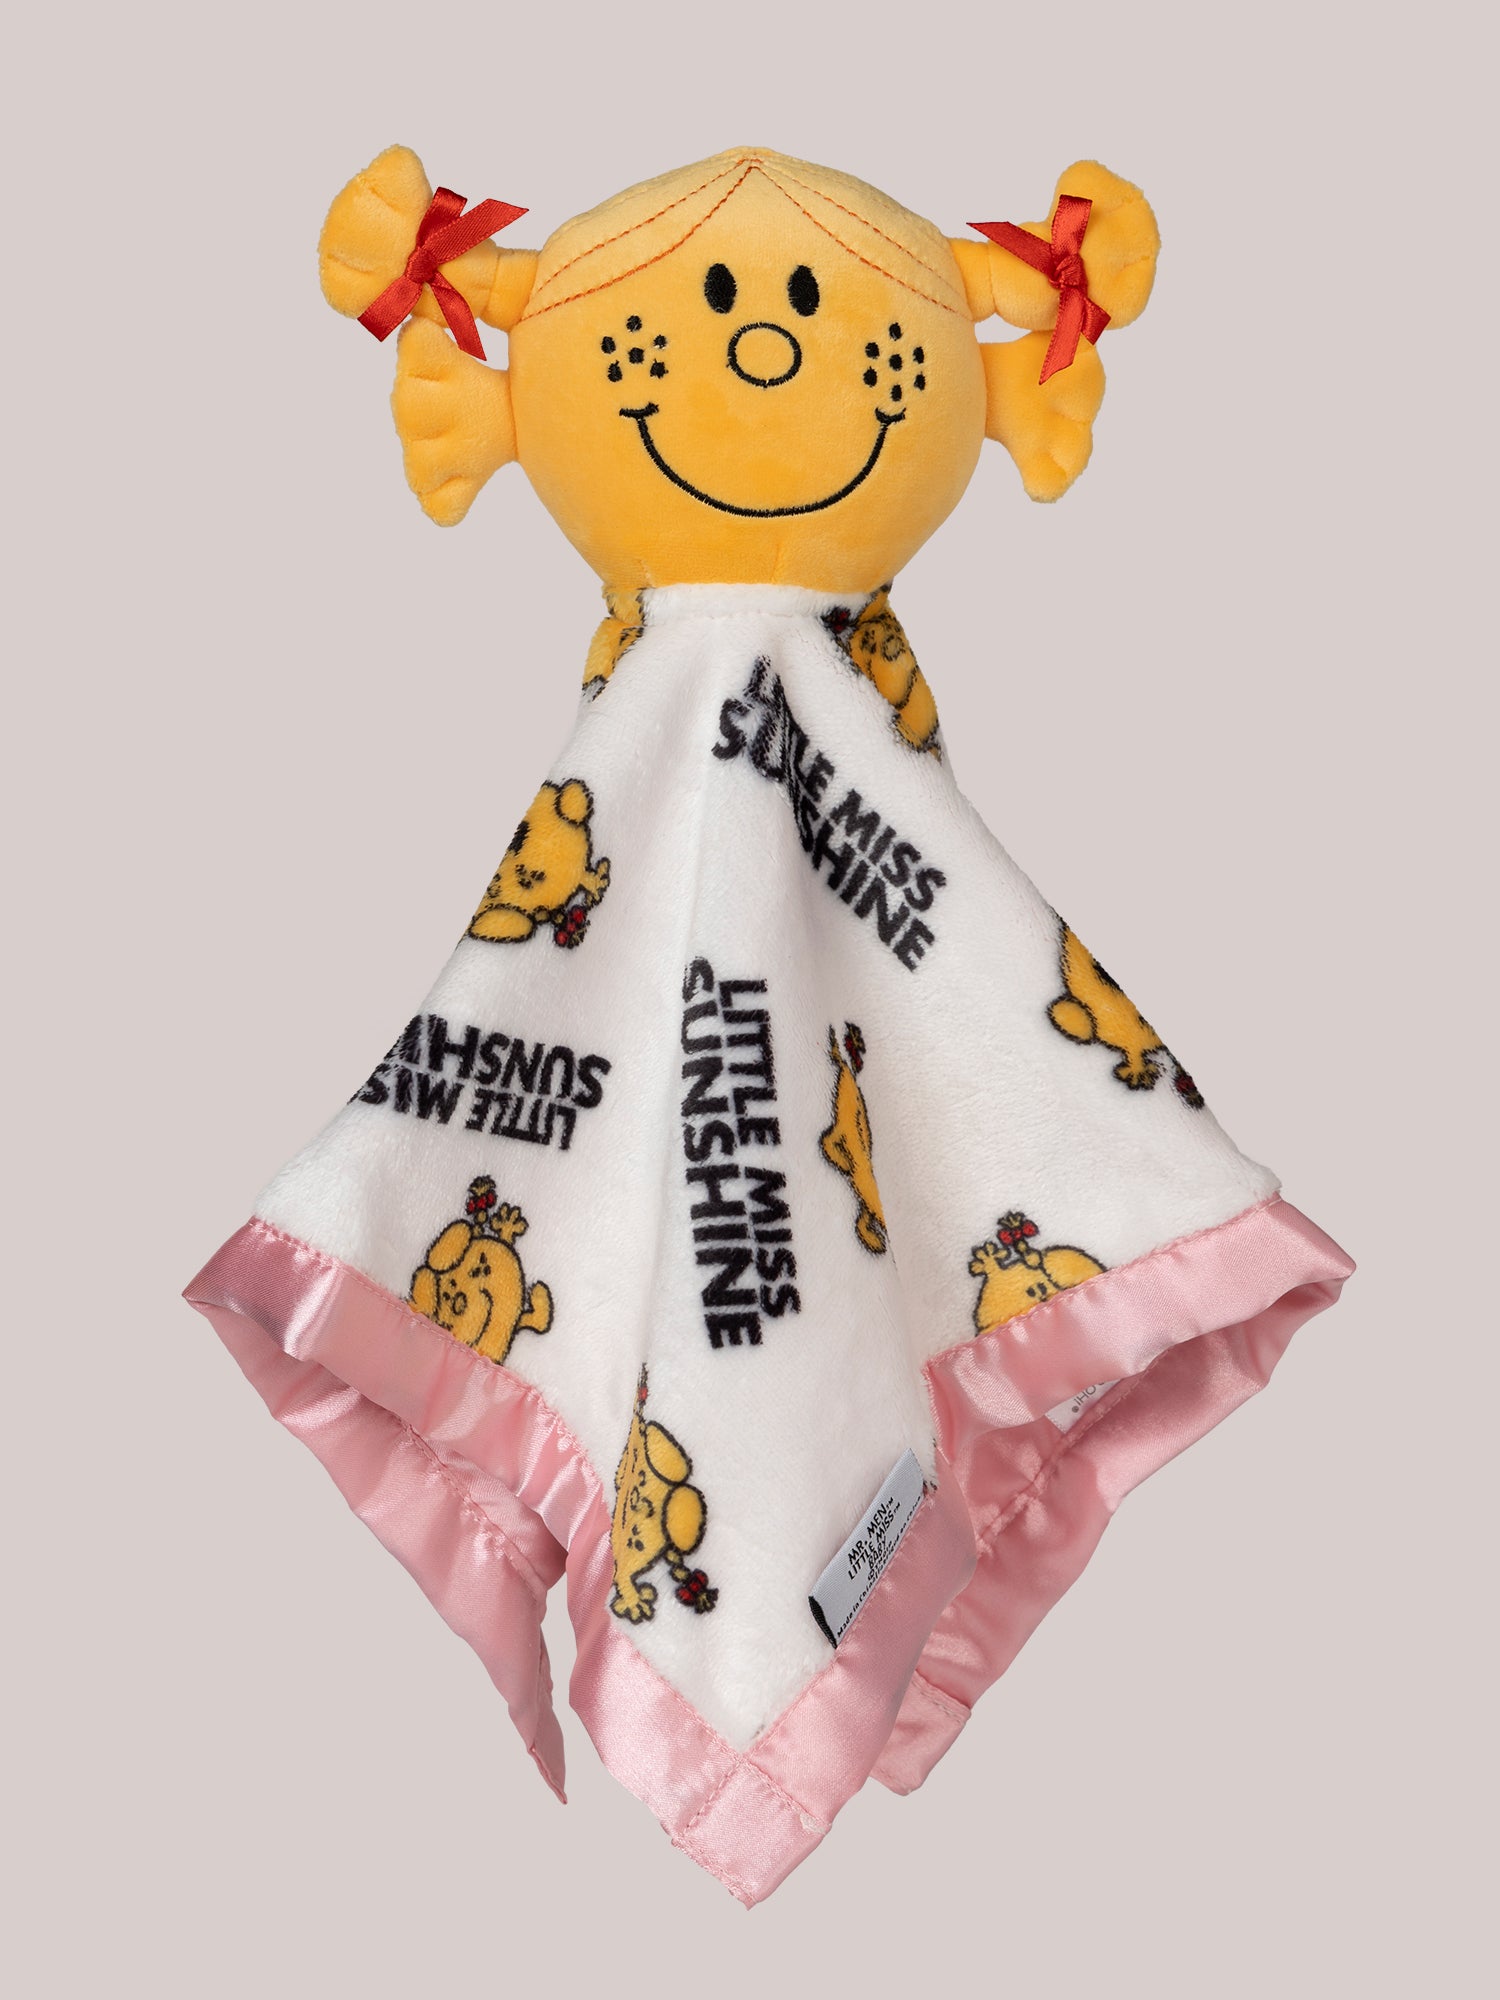 Little Miss Sunshine security blanket flat lay with little miss sunshine plush on top